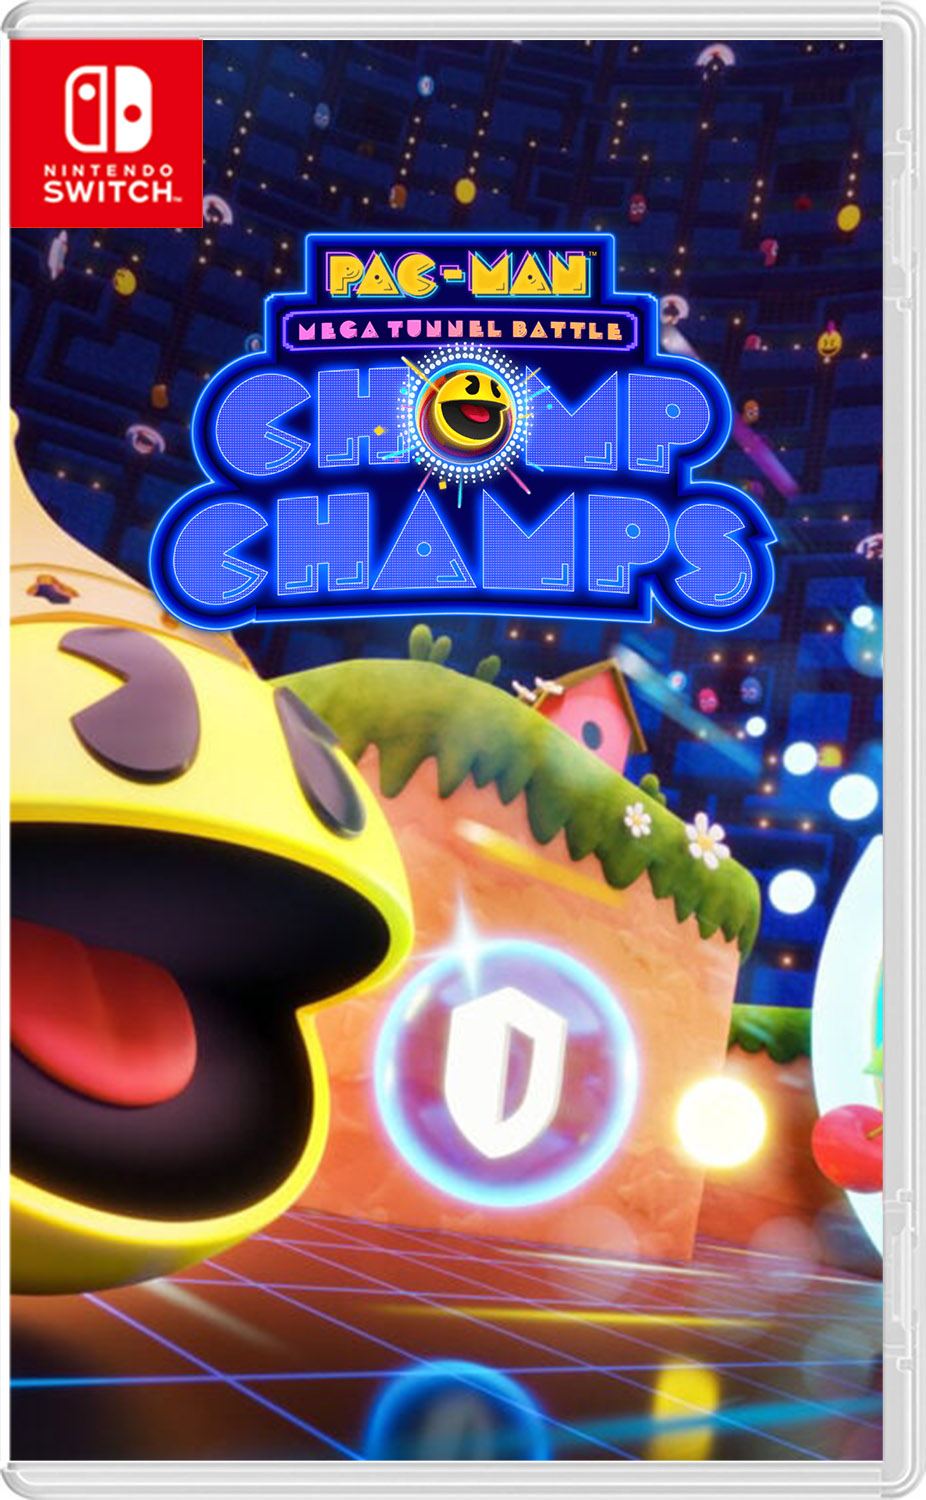 Pac-Man Mega Tunnel Battle: Chomp Champs Announced for All Major